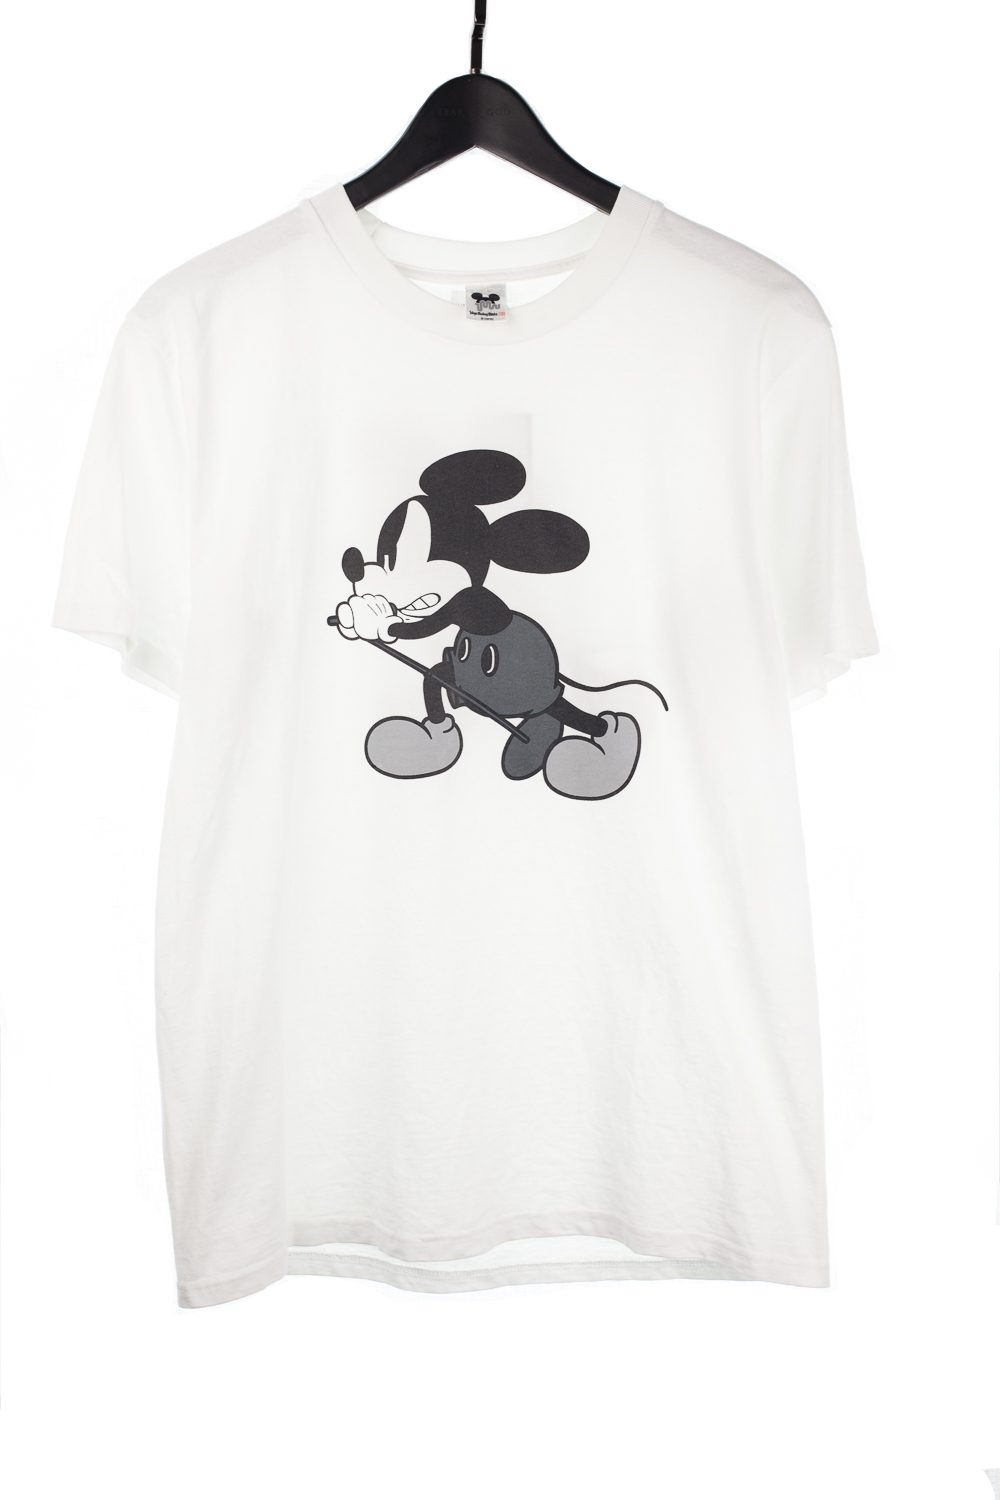 00 Cobain Mickey Shirt